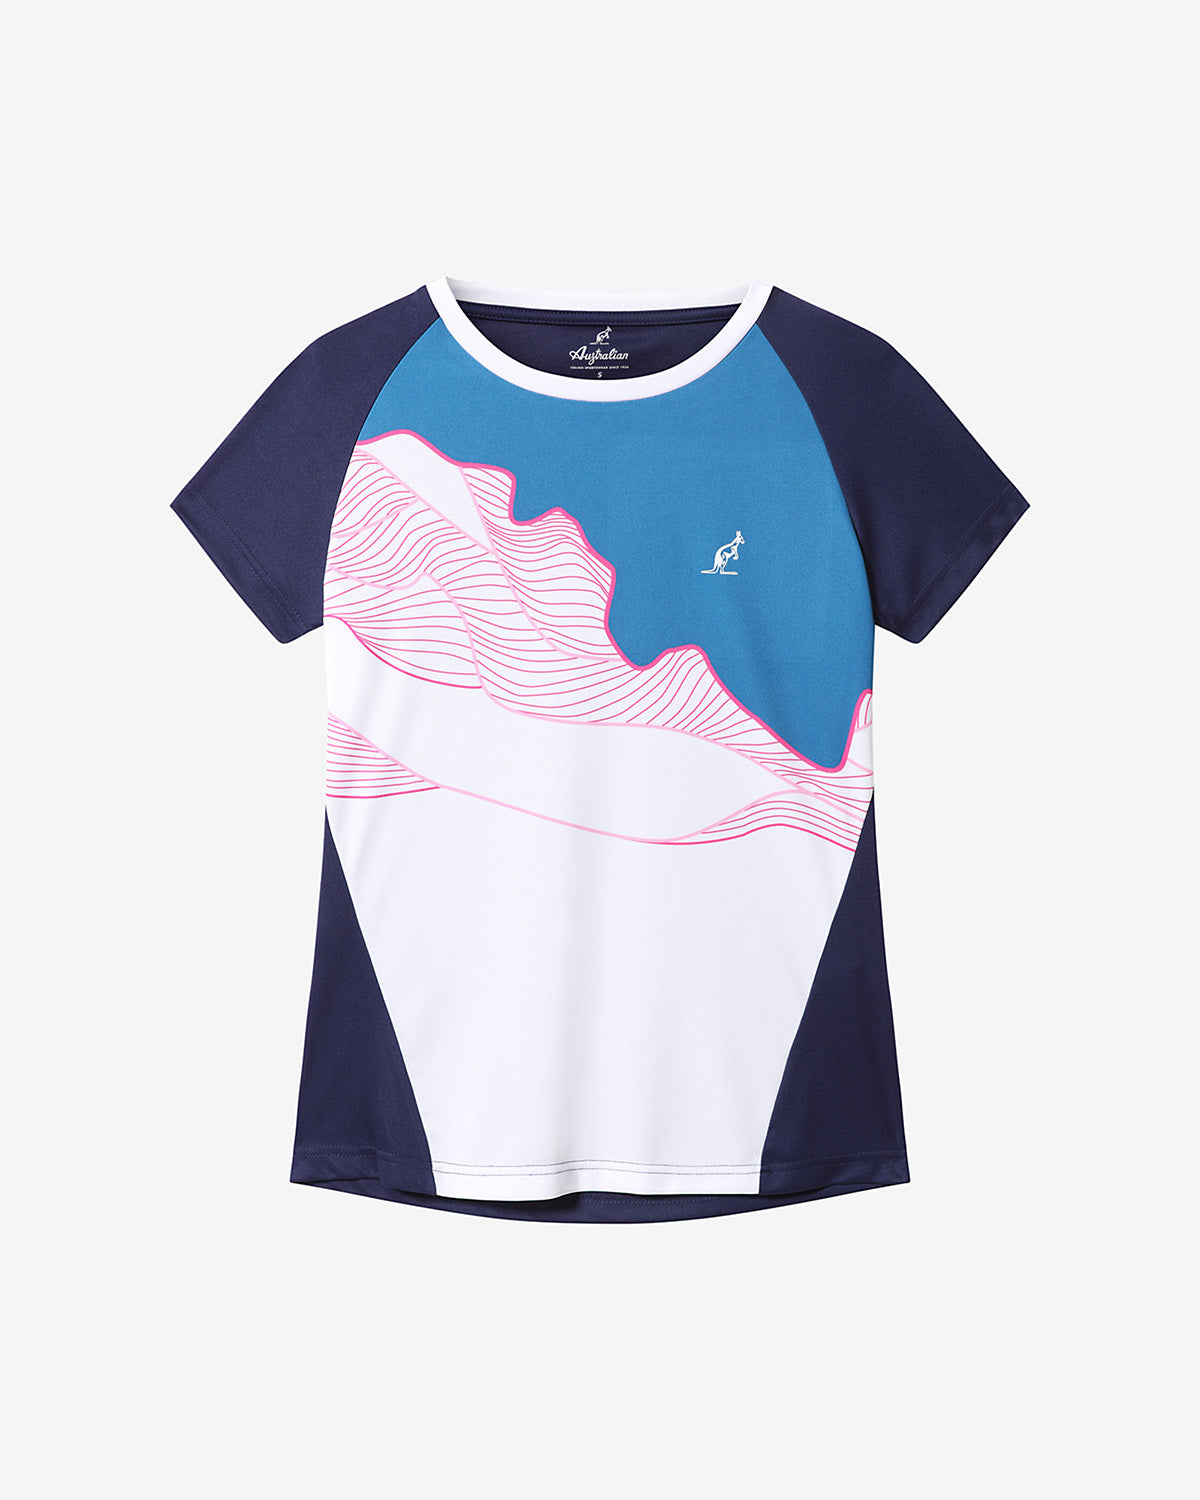 Ice T-shirt: Australian Tennis